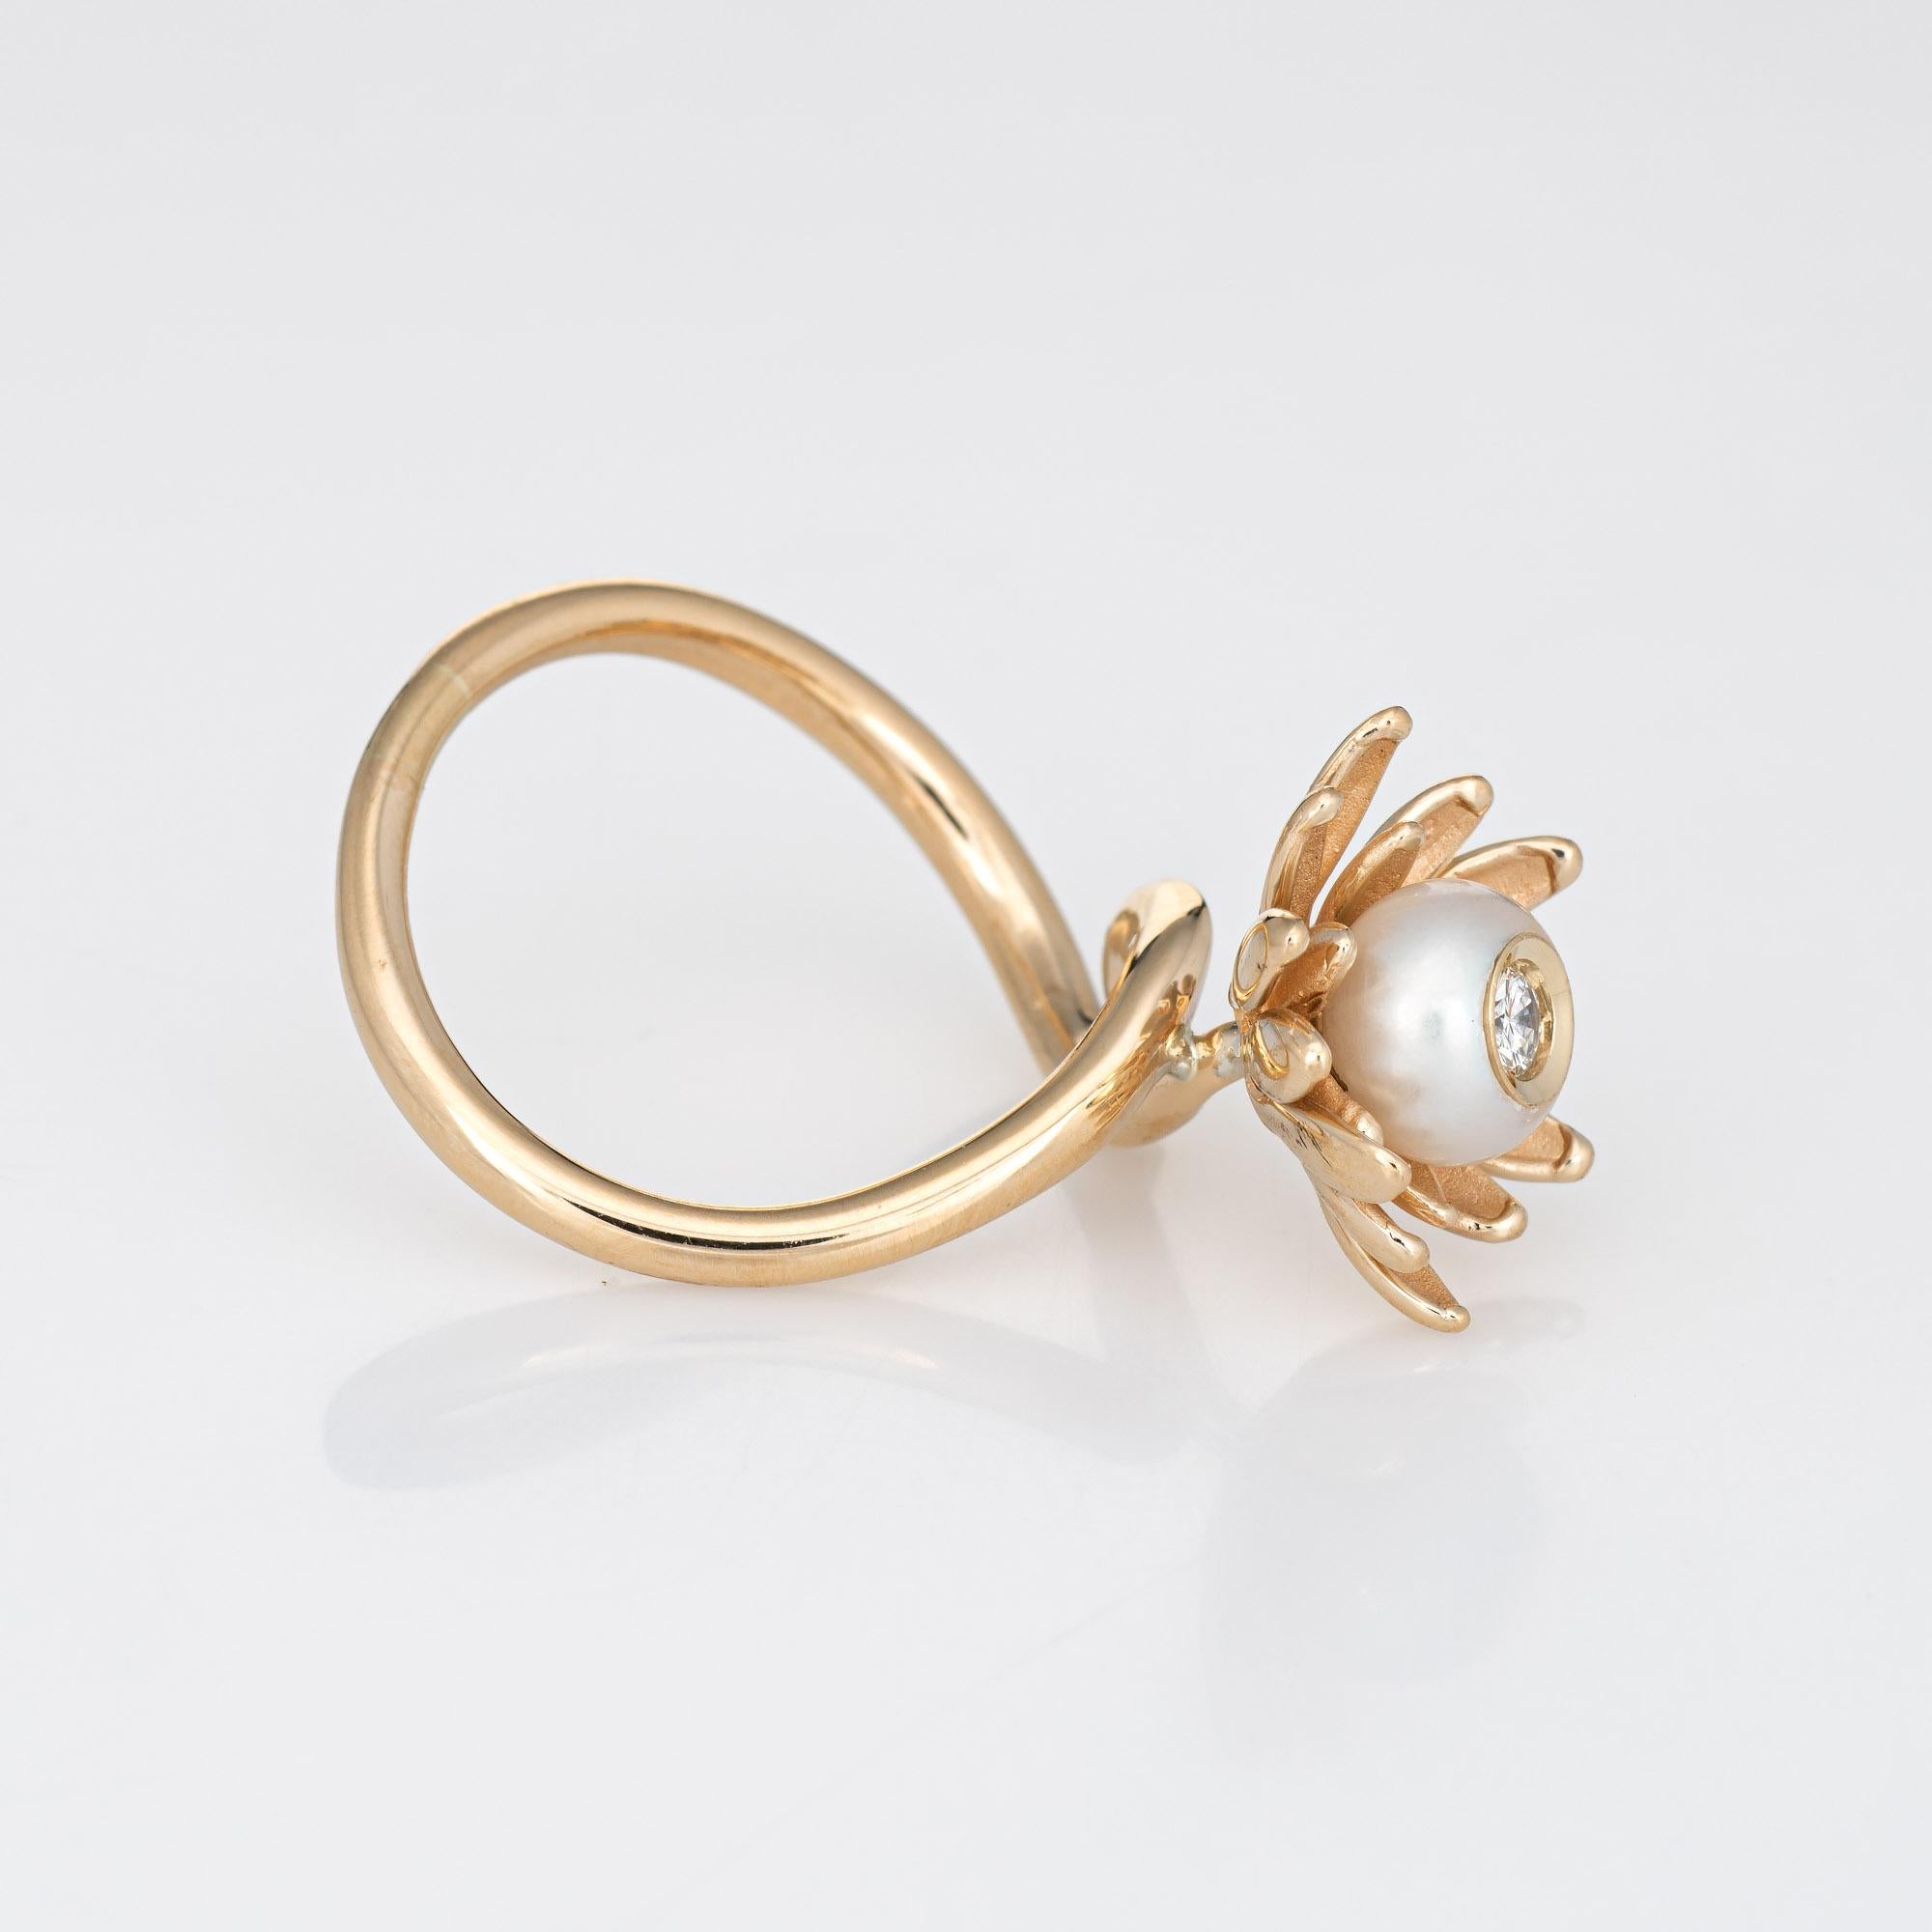 gold chatri ring design